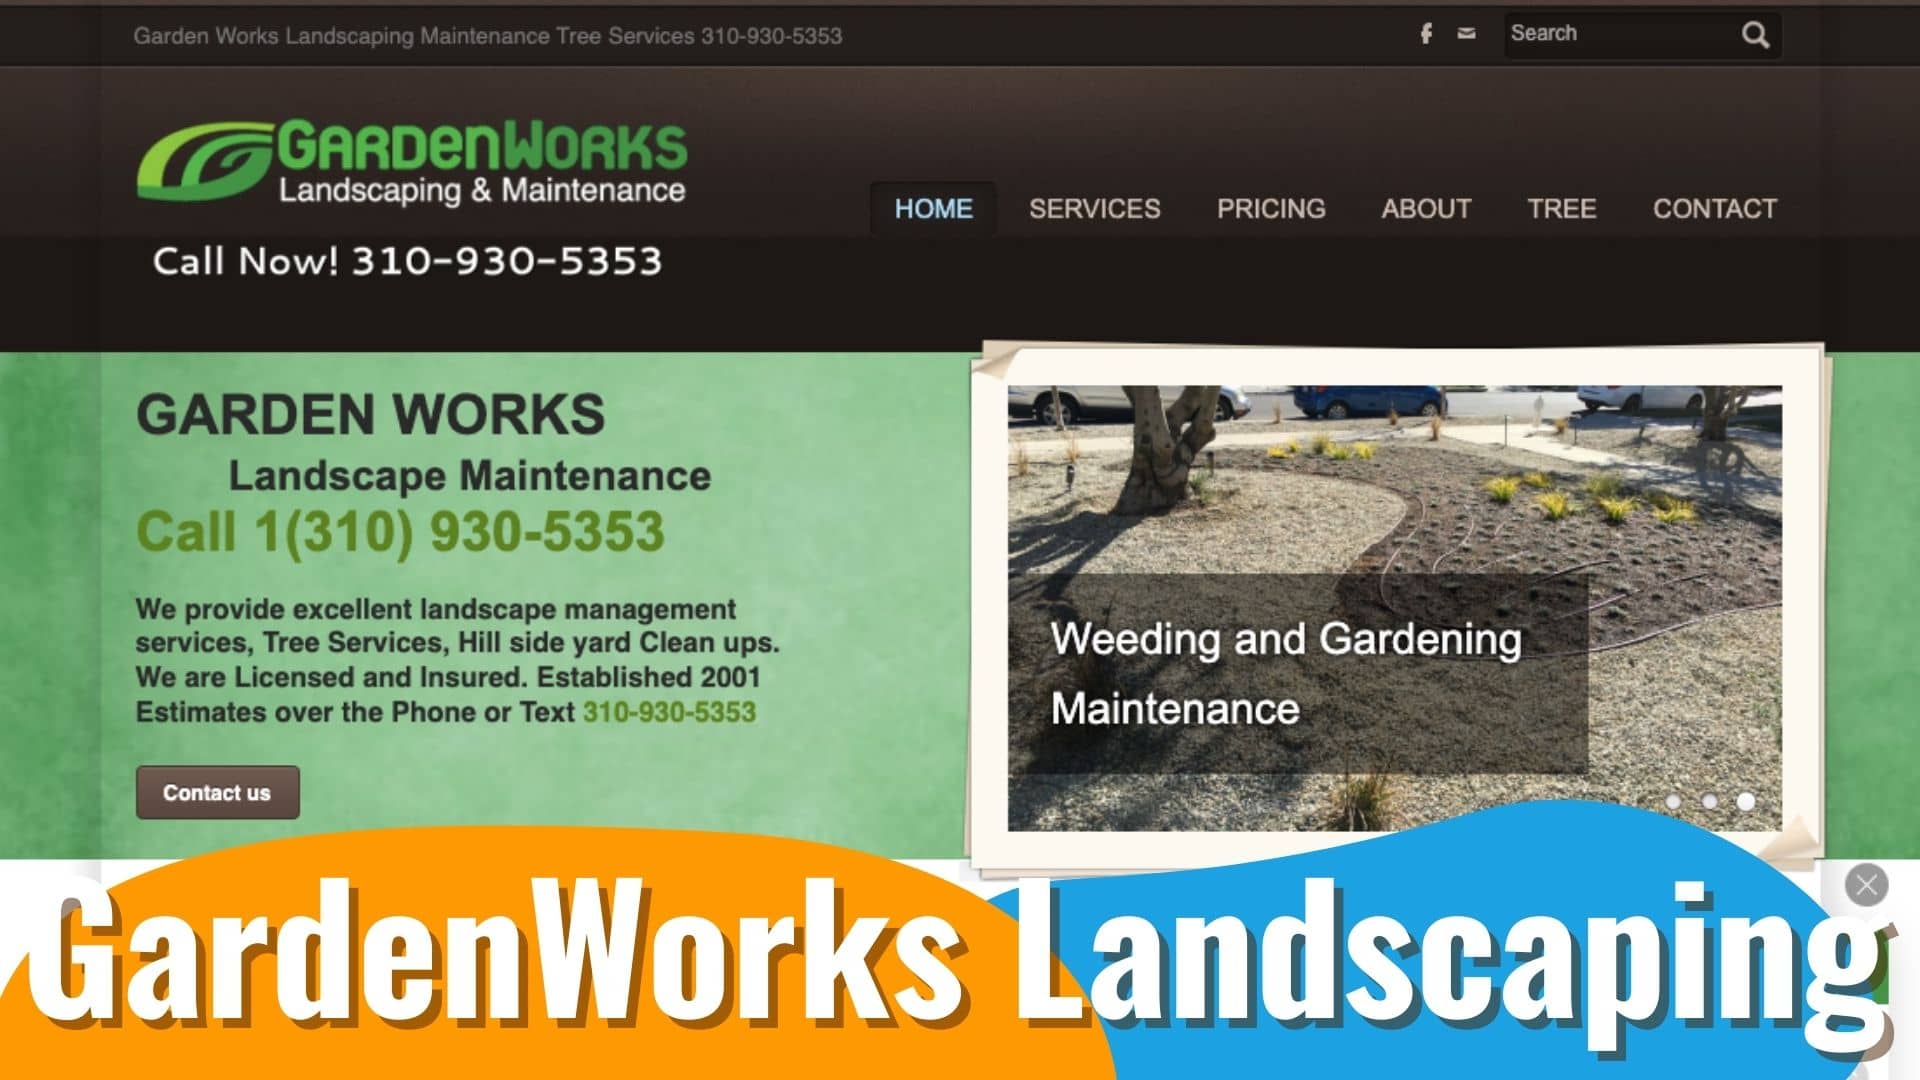 GardenWorks Landscaping Los Angeles